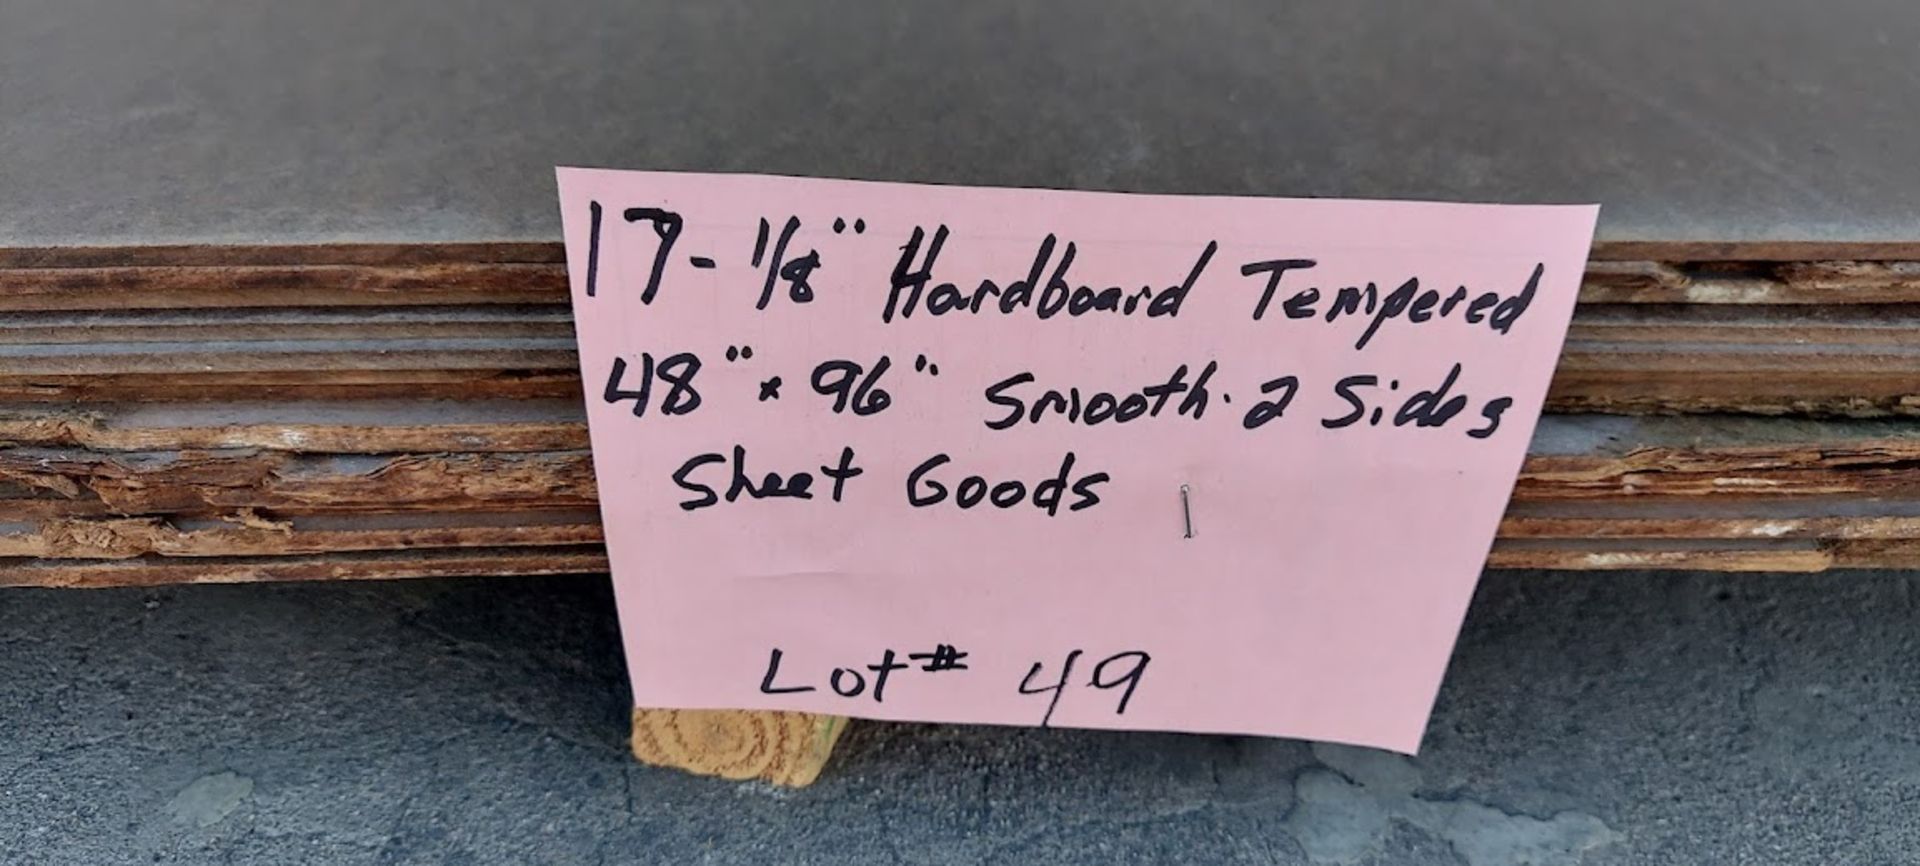 17 pcs 1/8" Hardboard Tempered Smooth 2 Sides 48" x 96" - Image 3 of 3